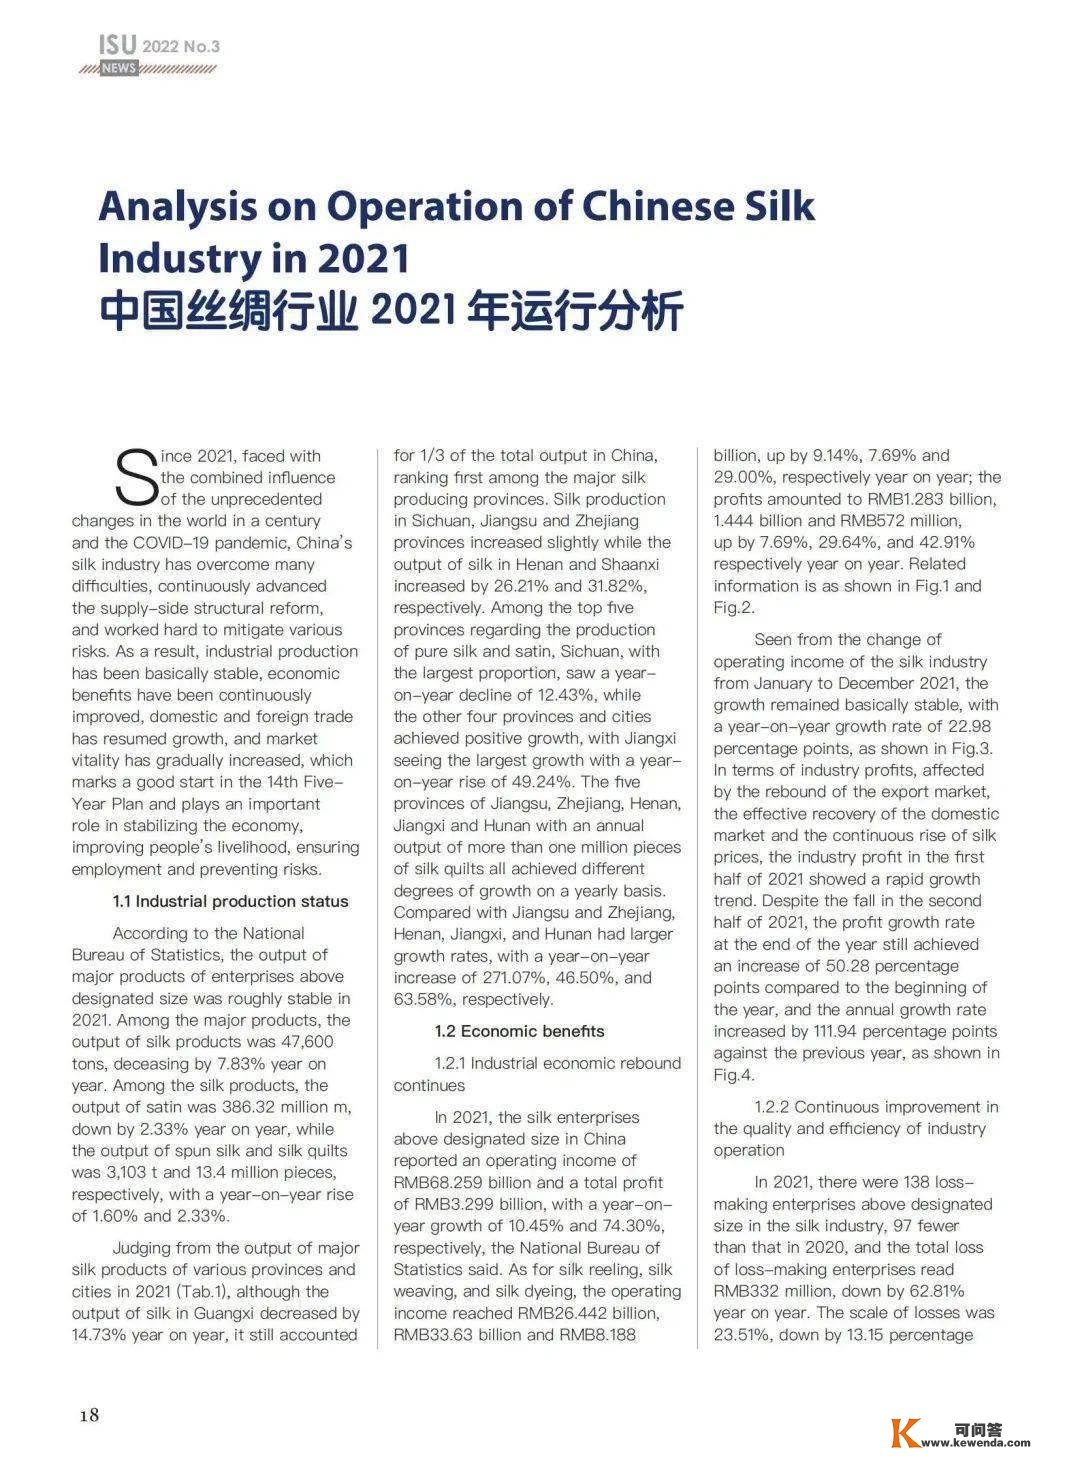 《ISU NEWS》第3期 | 中国丝绸行业2021年运行阐发